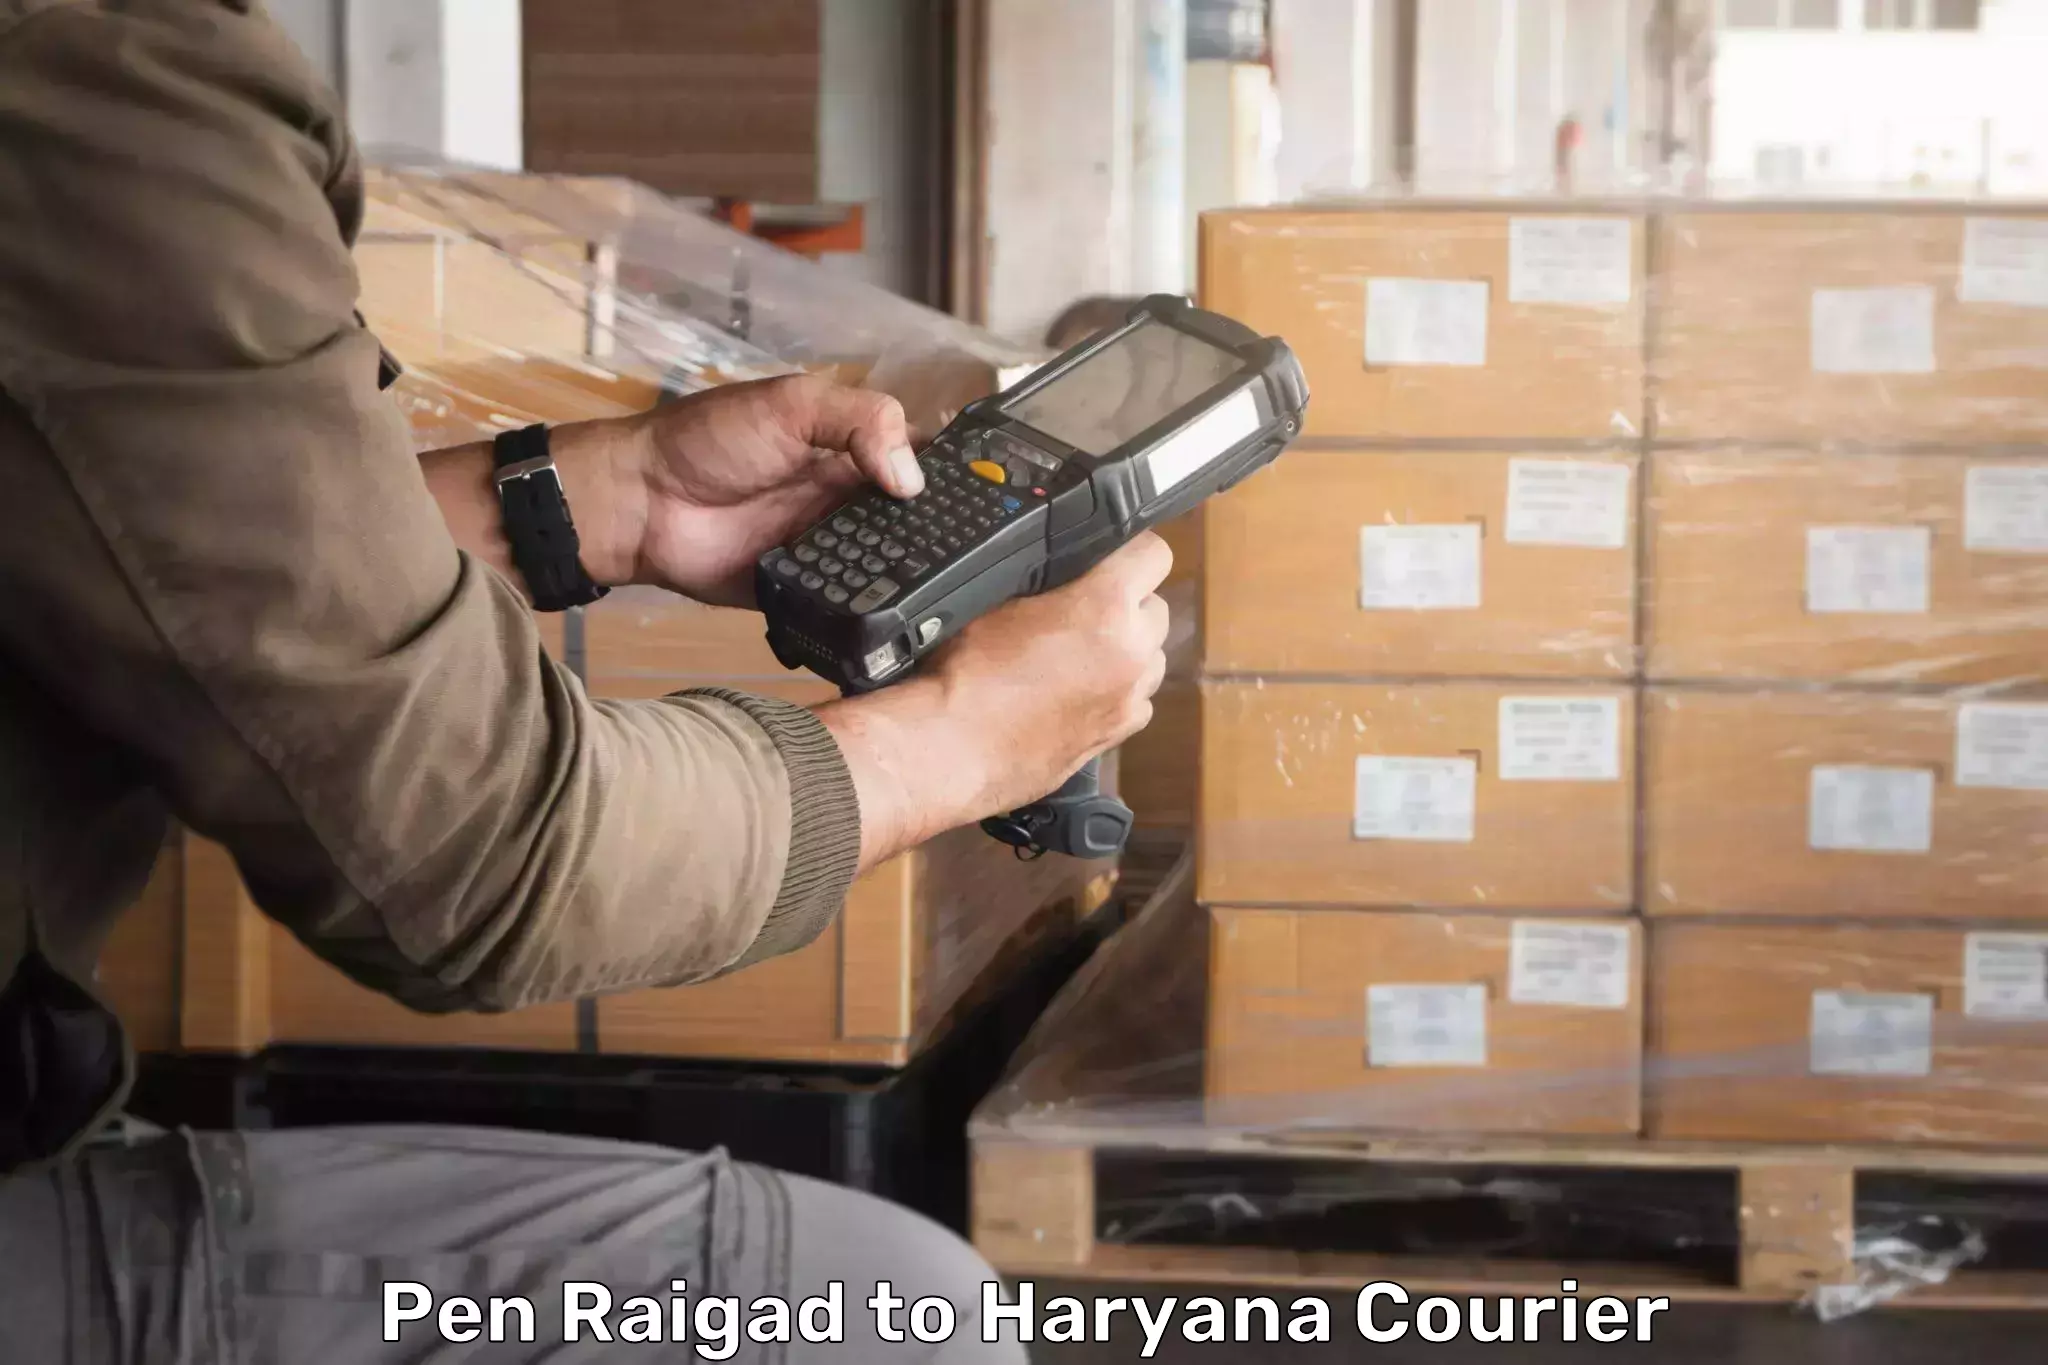 Easy access courier services Pen Raigad to Bilaspur Haryana